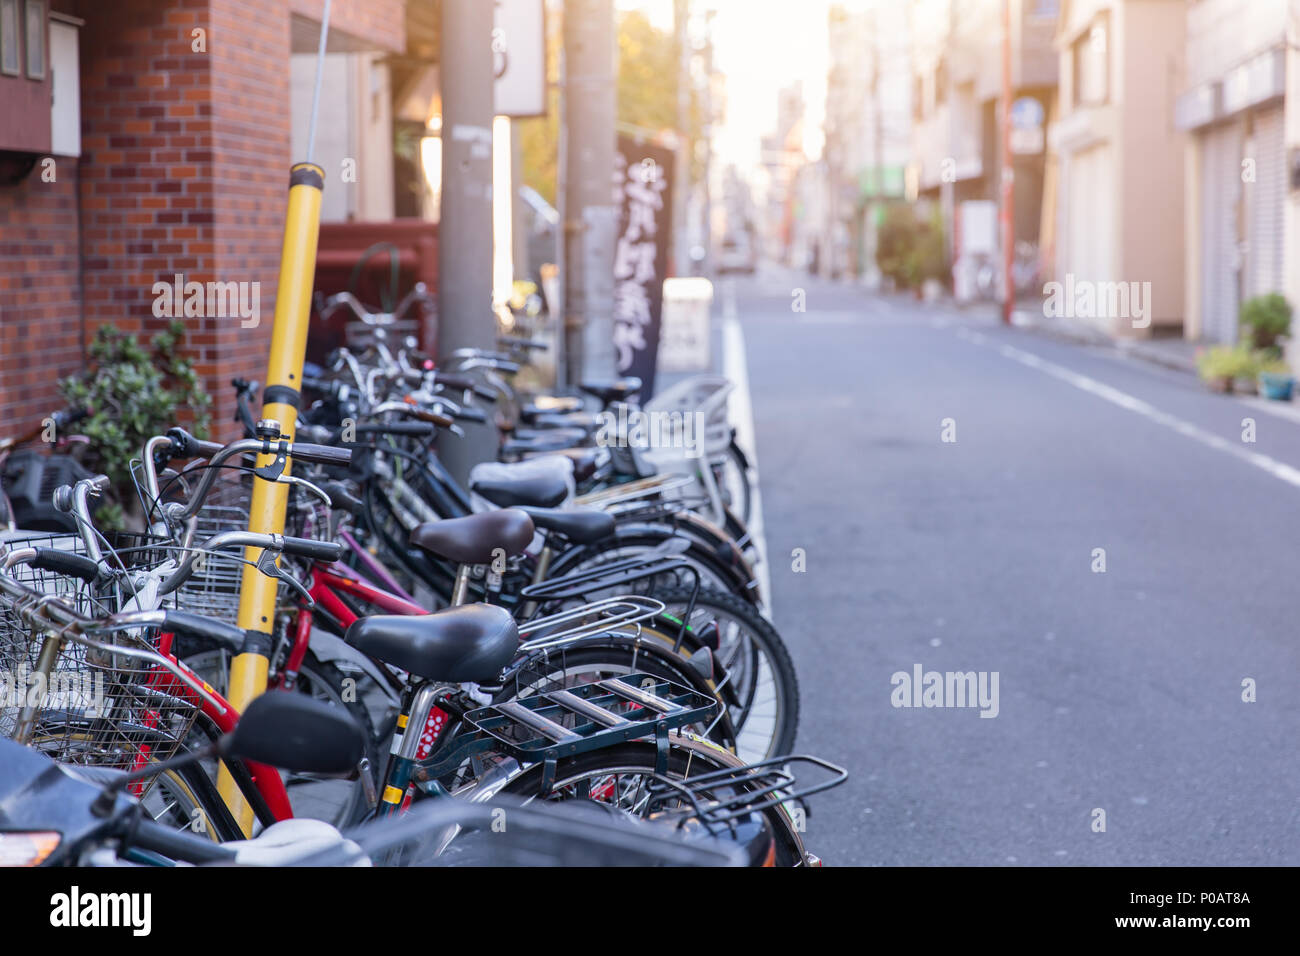 Bike parking at road side in Tokyo japan Stock Photo